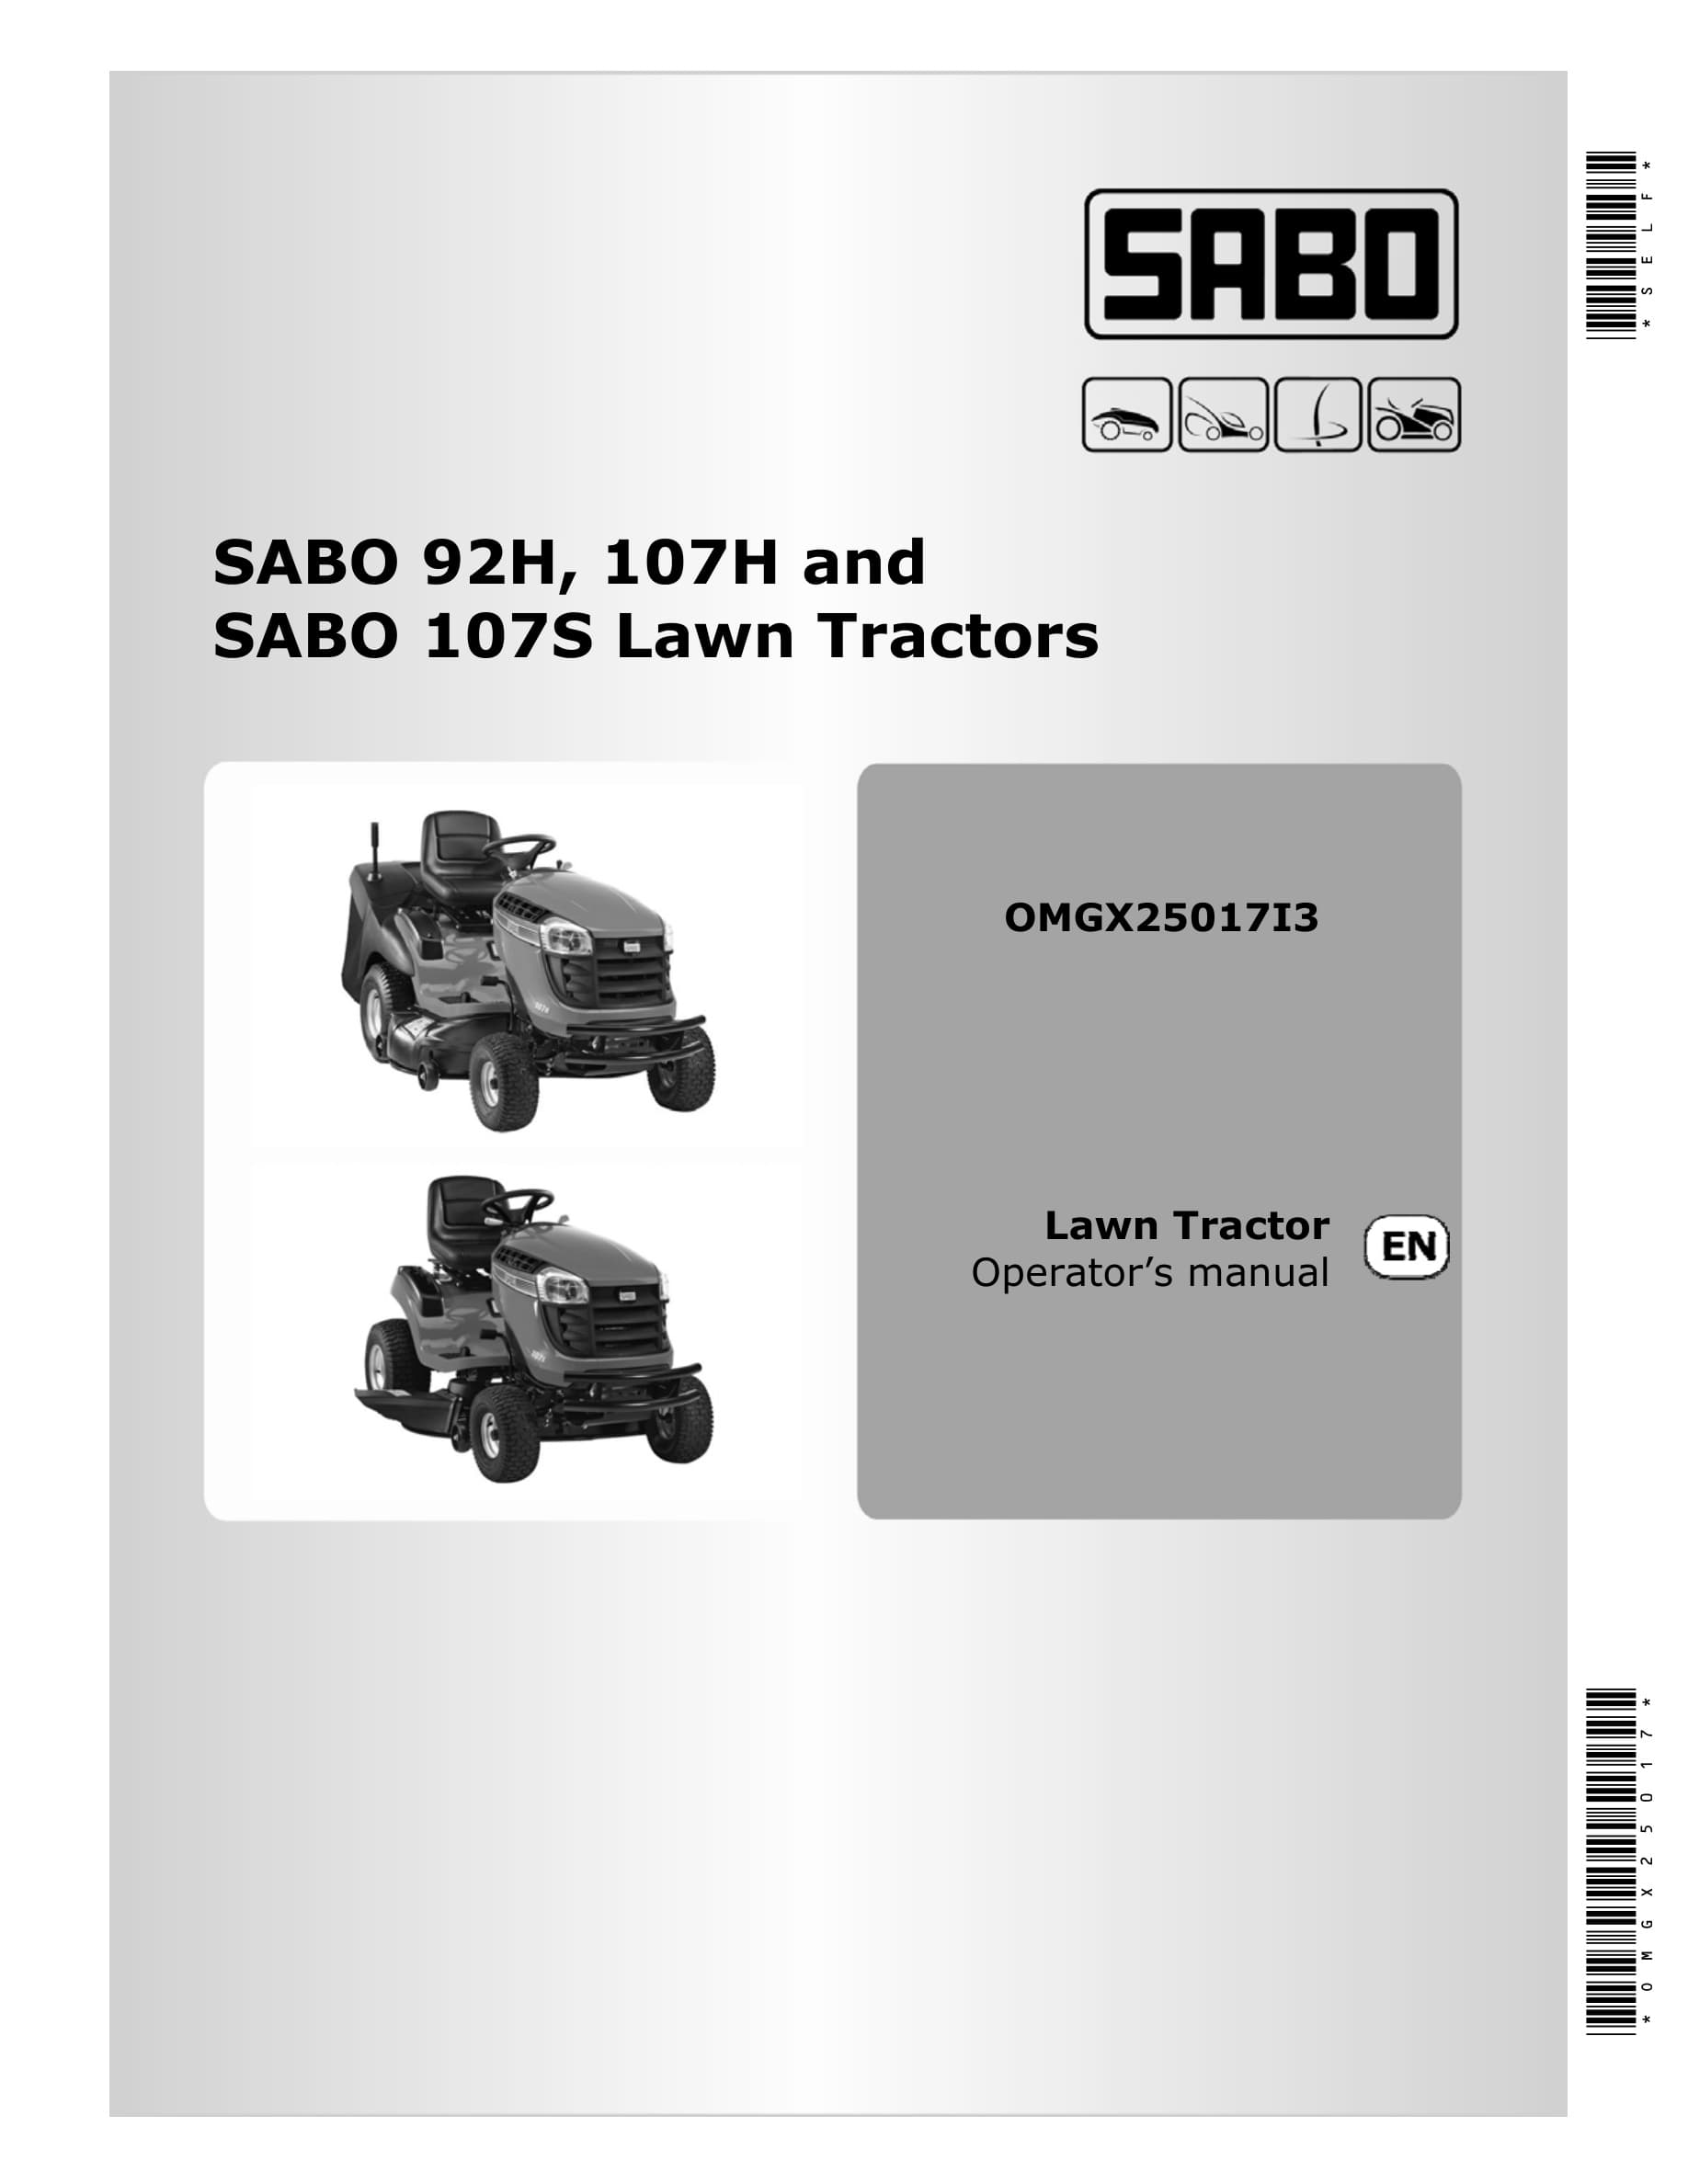 John Deere Sabo 92h, 107h And Sabo 107s Lawn Tractors Operator Manuals OMGX25017-1